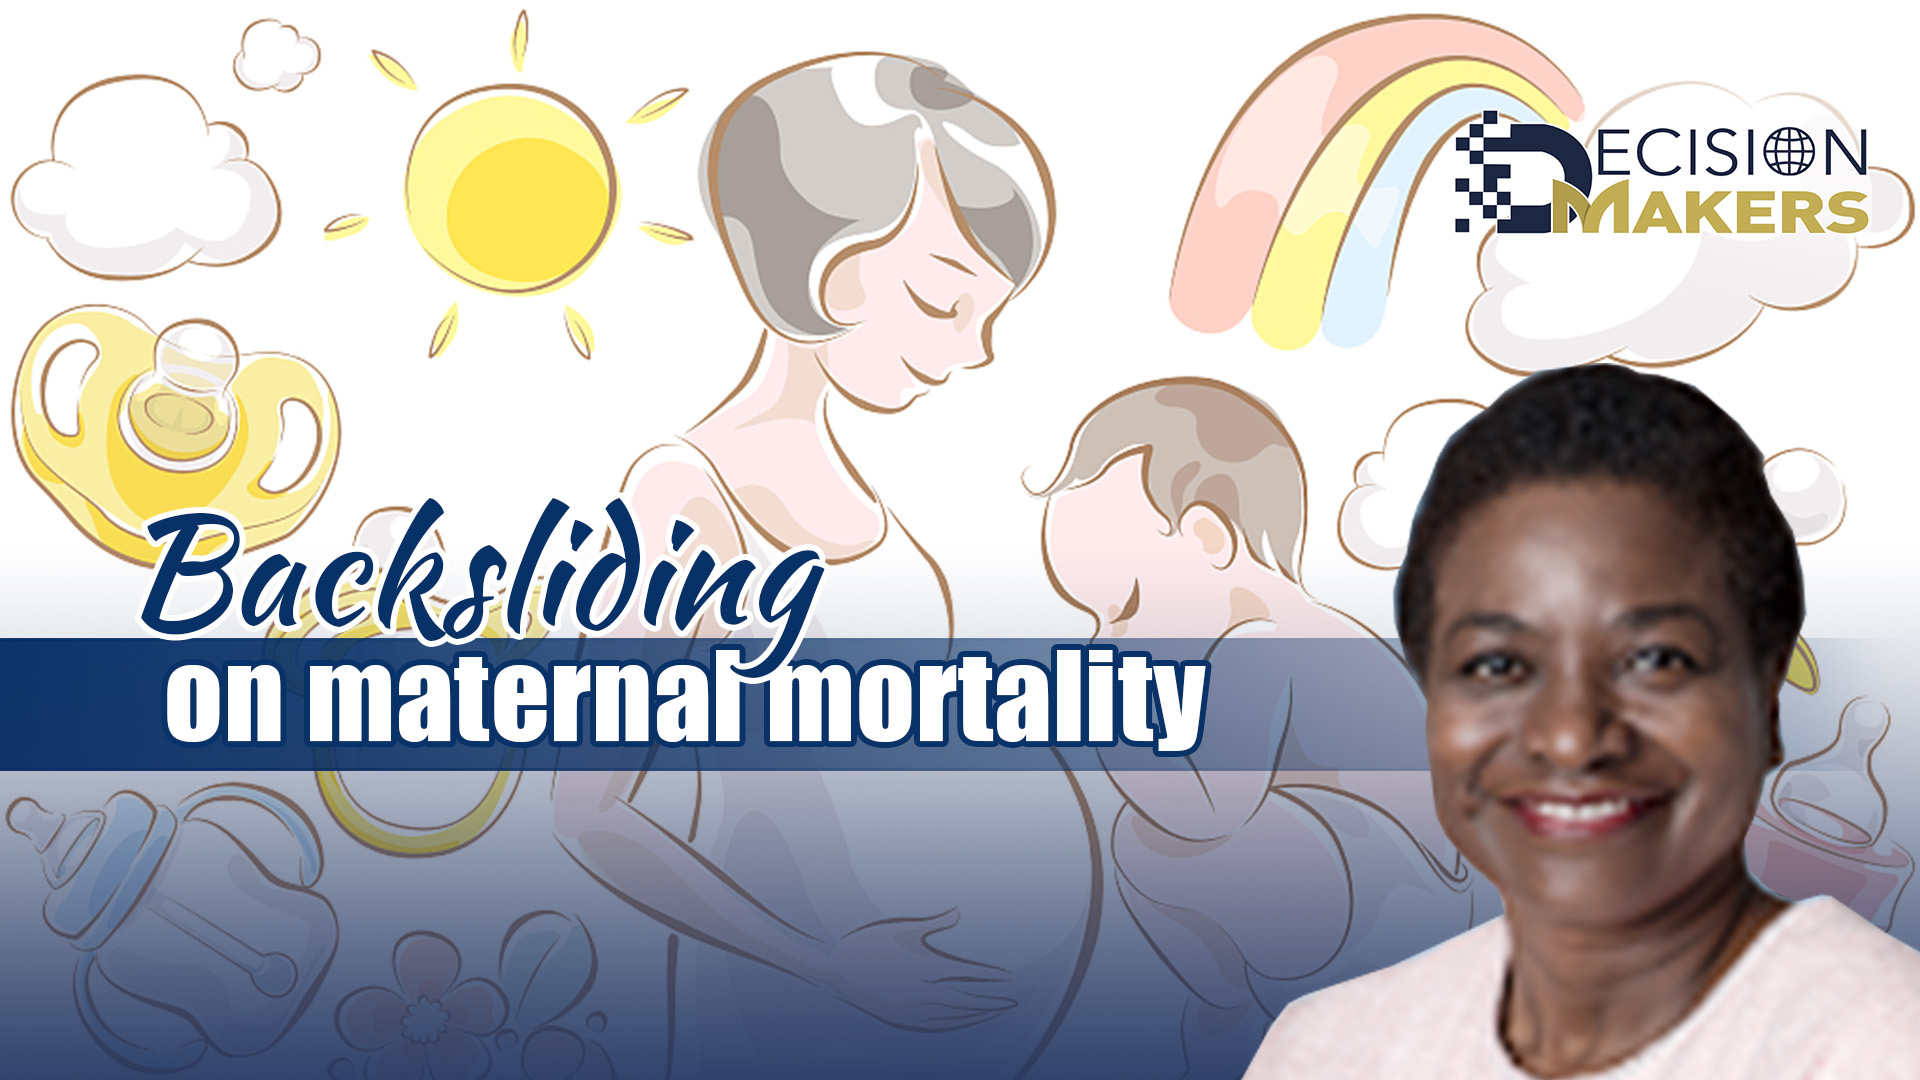 Backsliding on maternal mortality